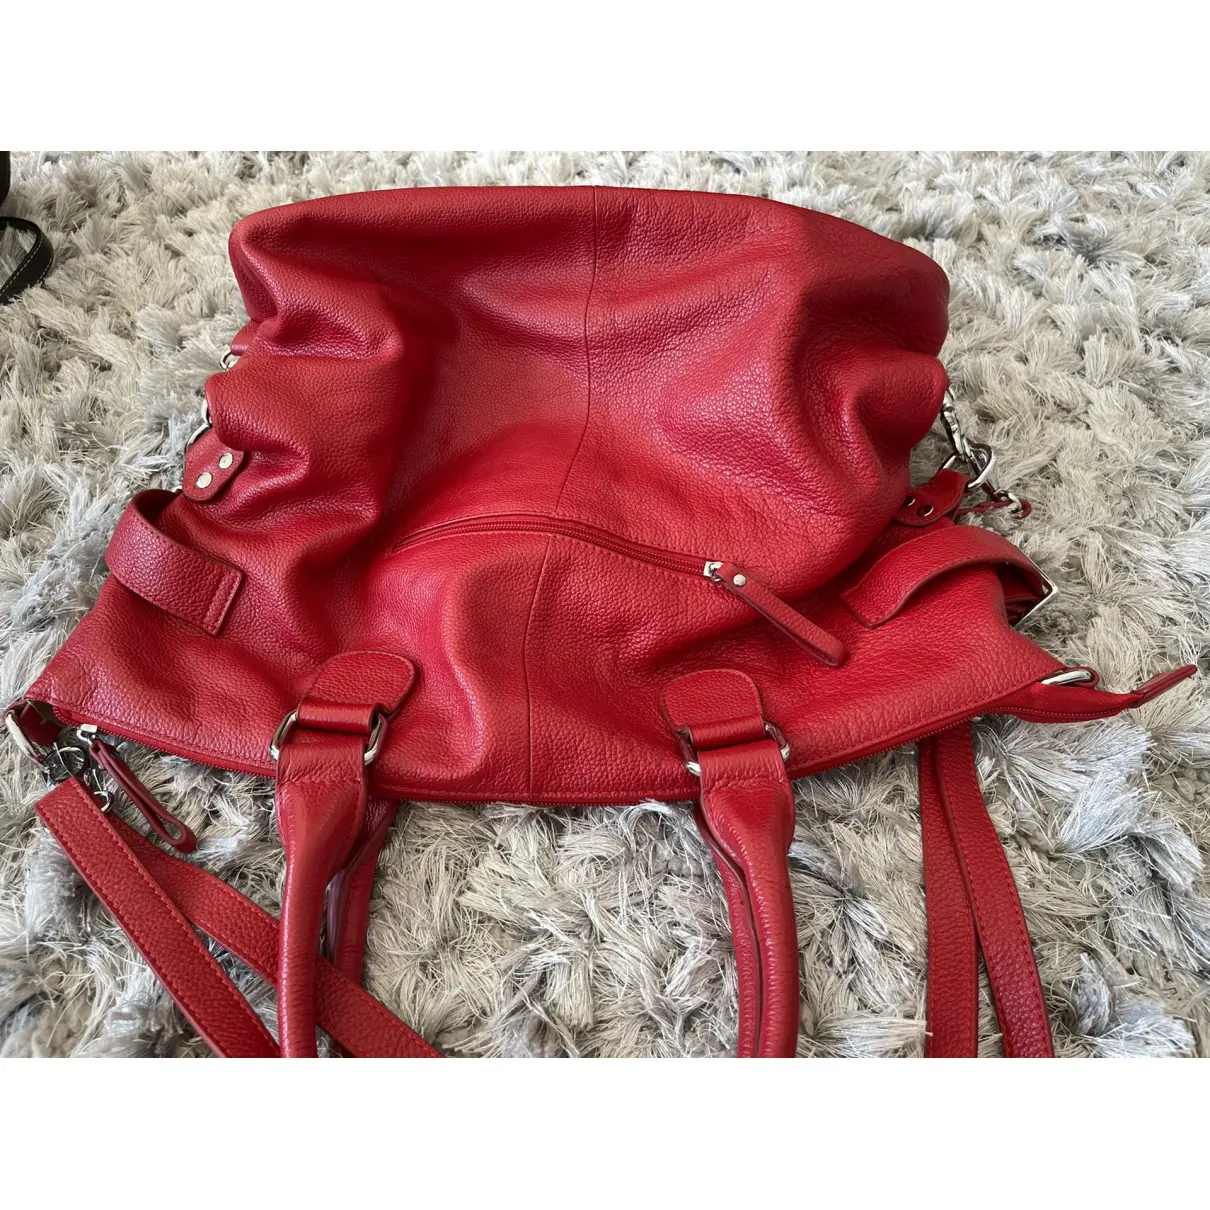 Leather handbag LORENZO